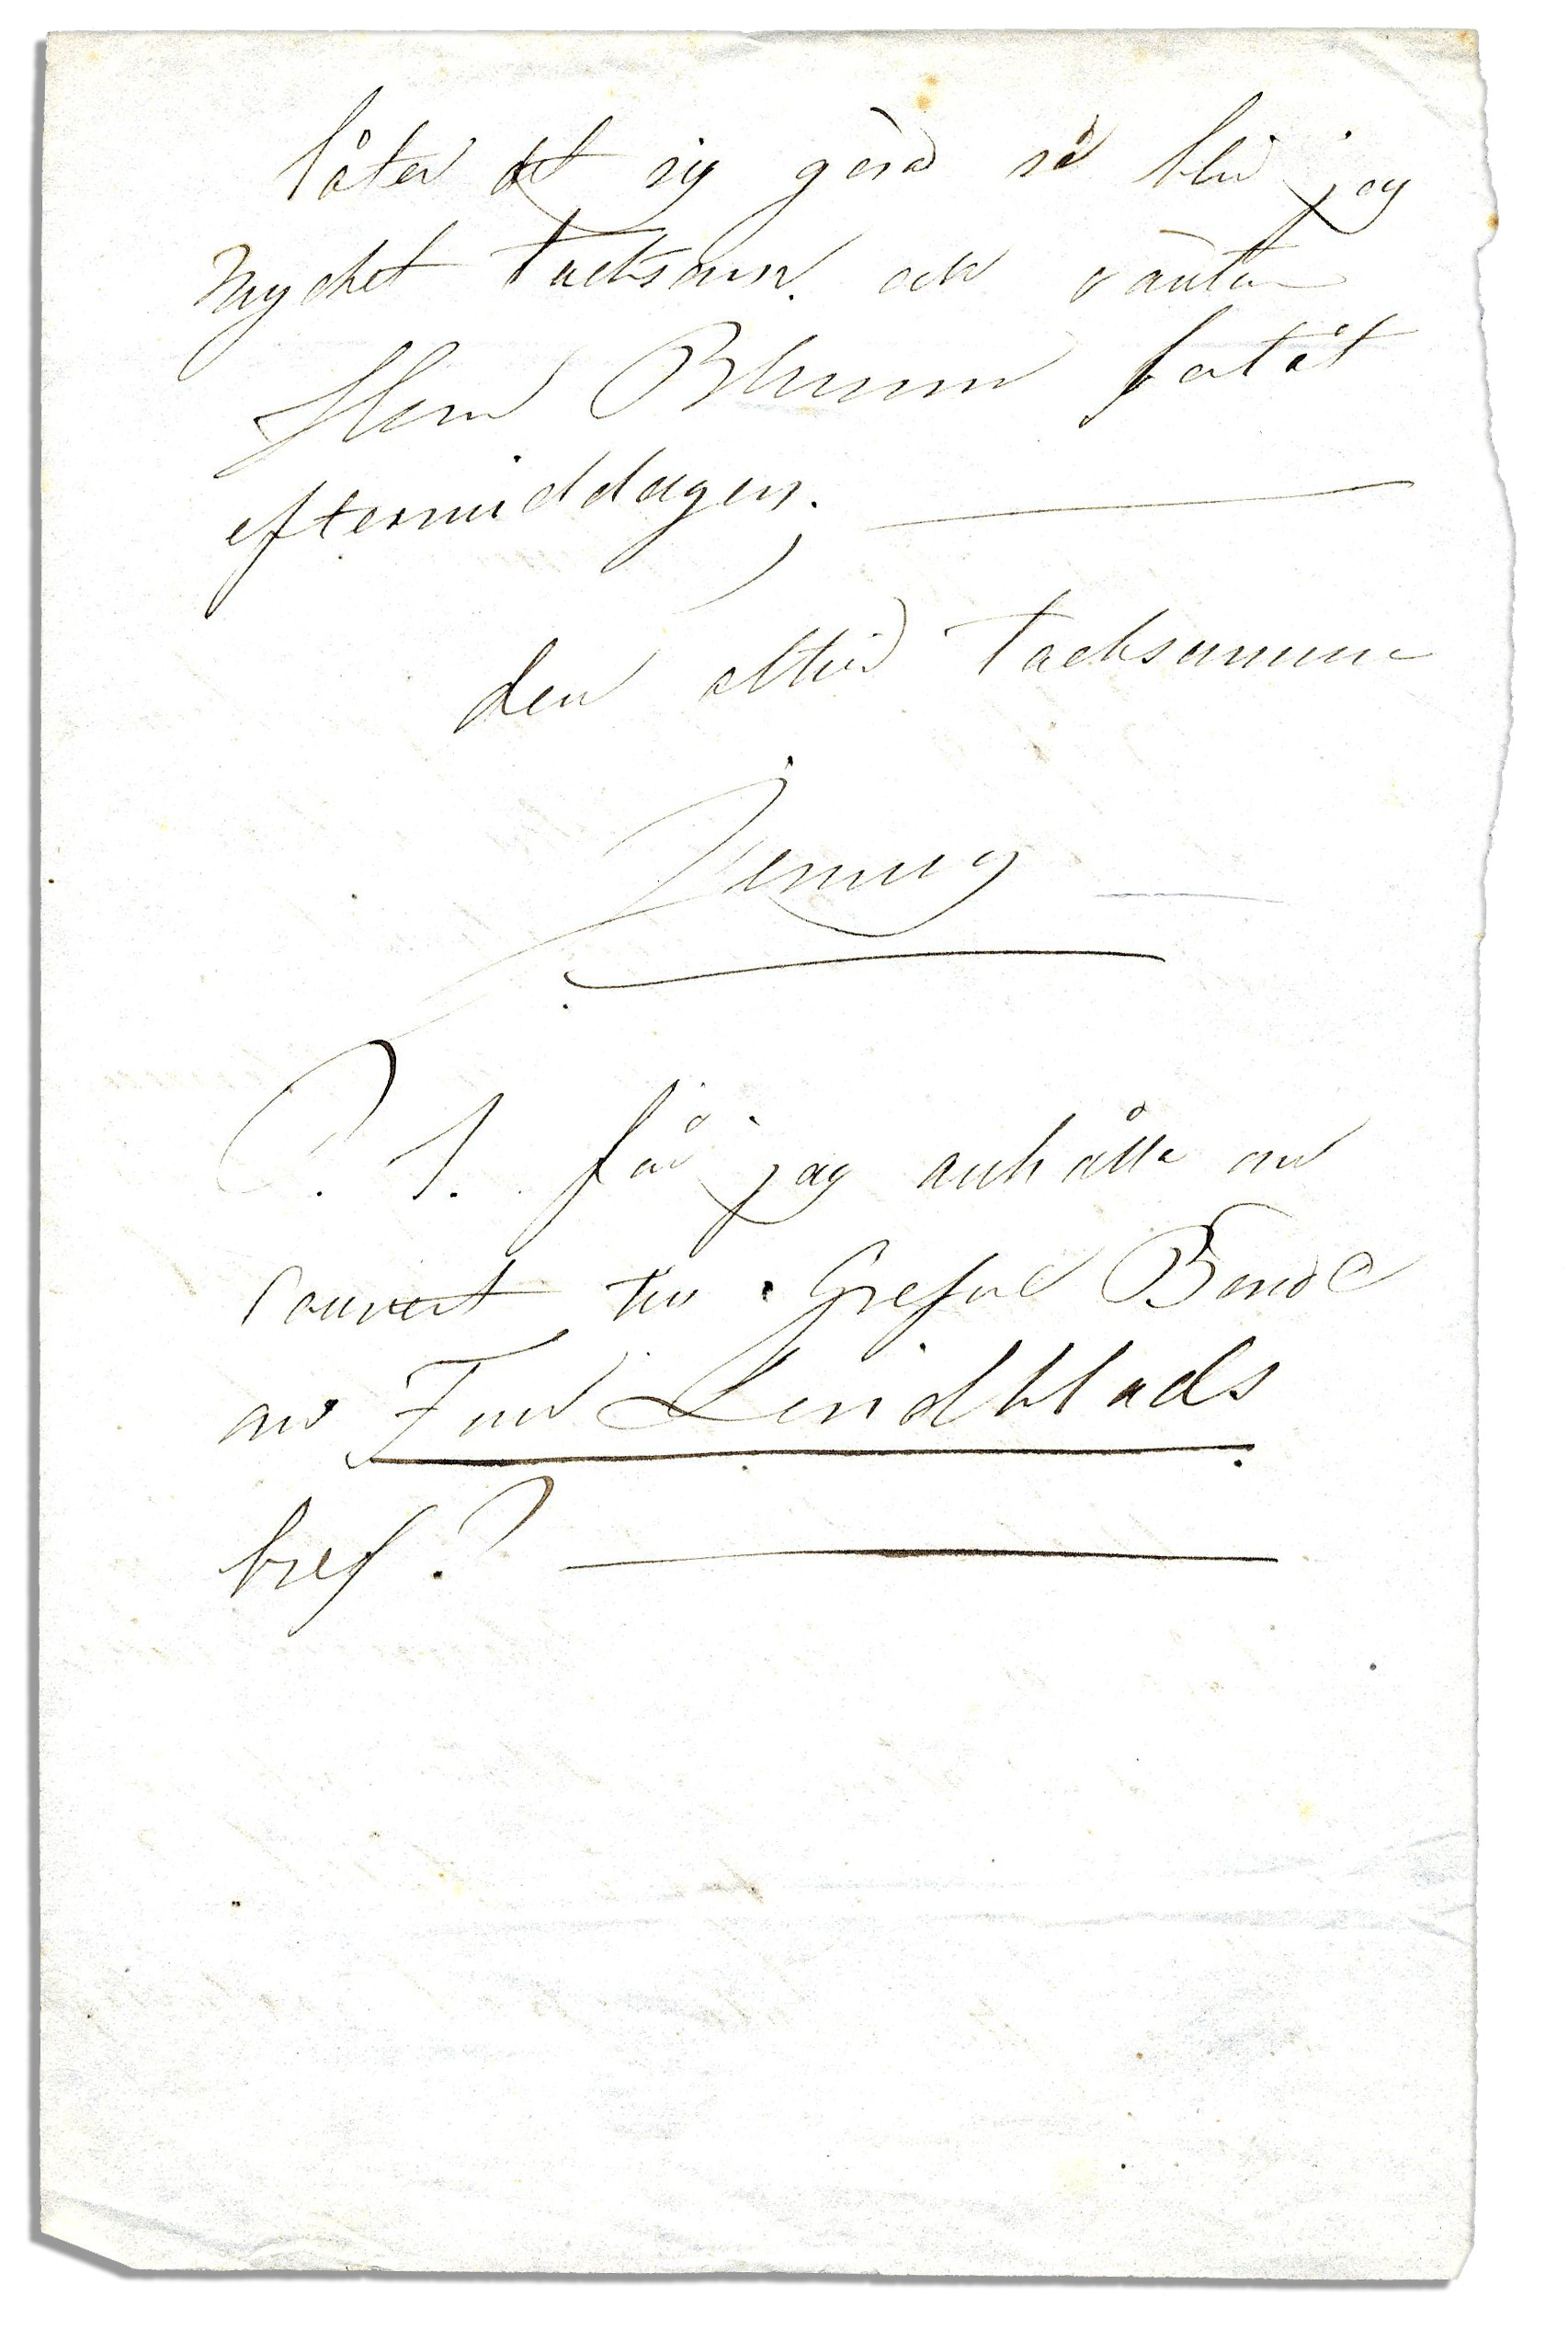 Jenny Lind ''Swedish Nightingale'' Autograph Letter Signed Autograph letter signed by Jenny Lind, - Image 3 of 3